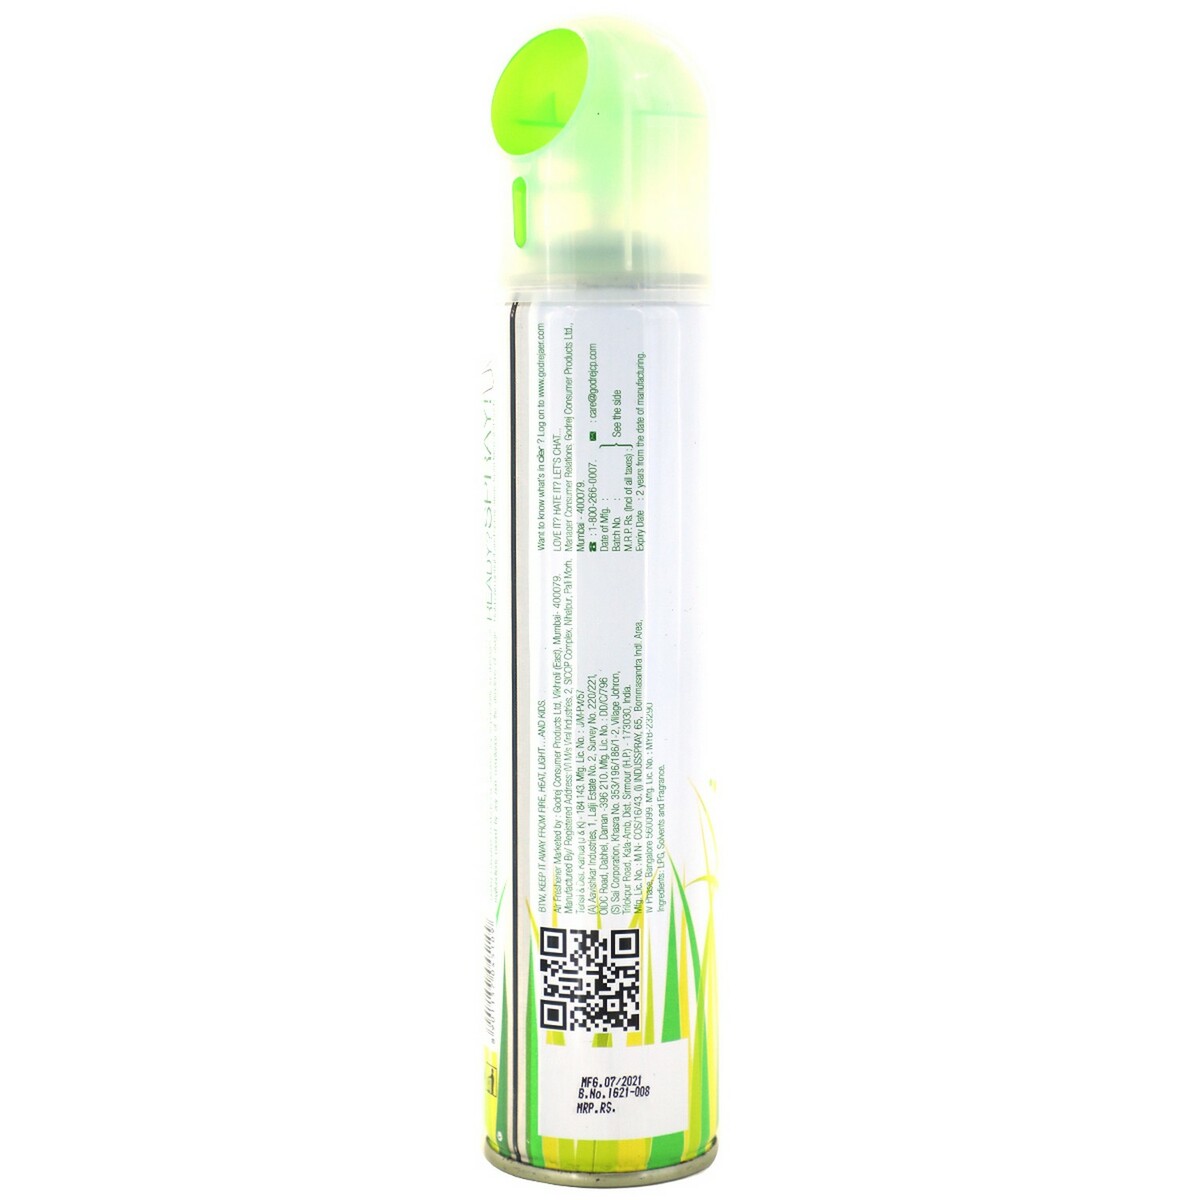 Godrej Aer Spray Air Freshener- Fresh Lush Green 220 ml